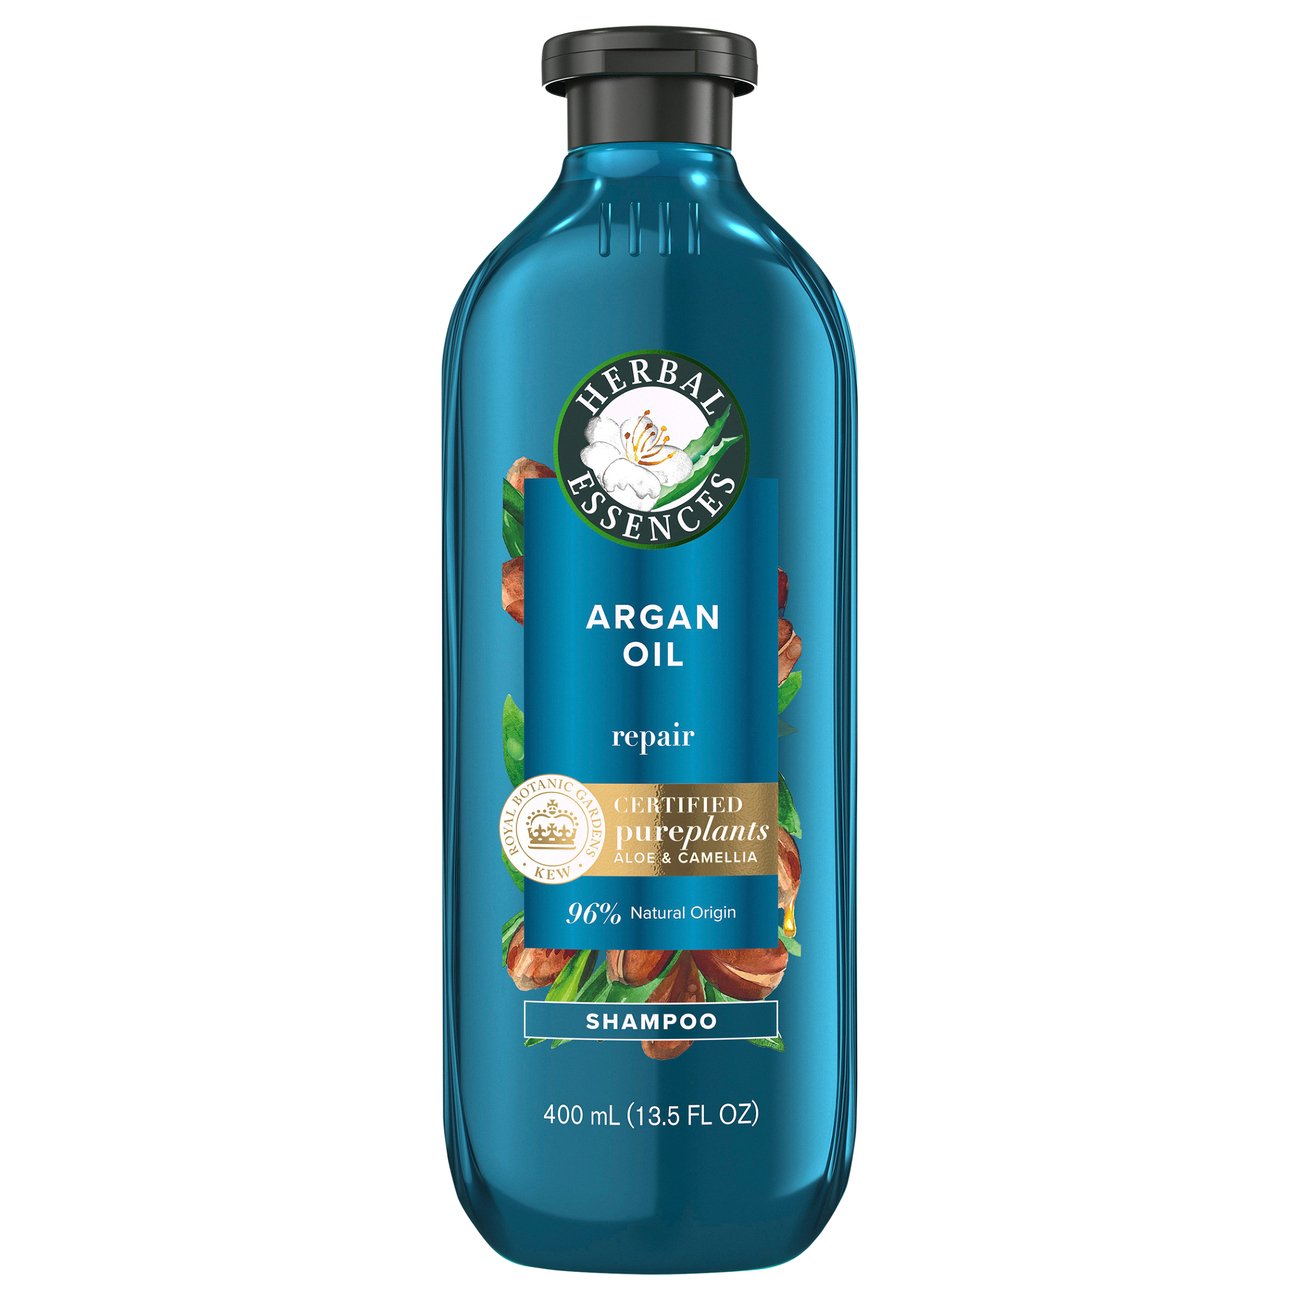 Essences bio:renew Argan Oil of Morocco Repairing Color-Safe - Shop Hair Care H-E-B